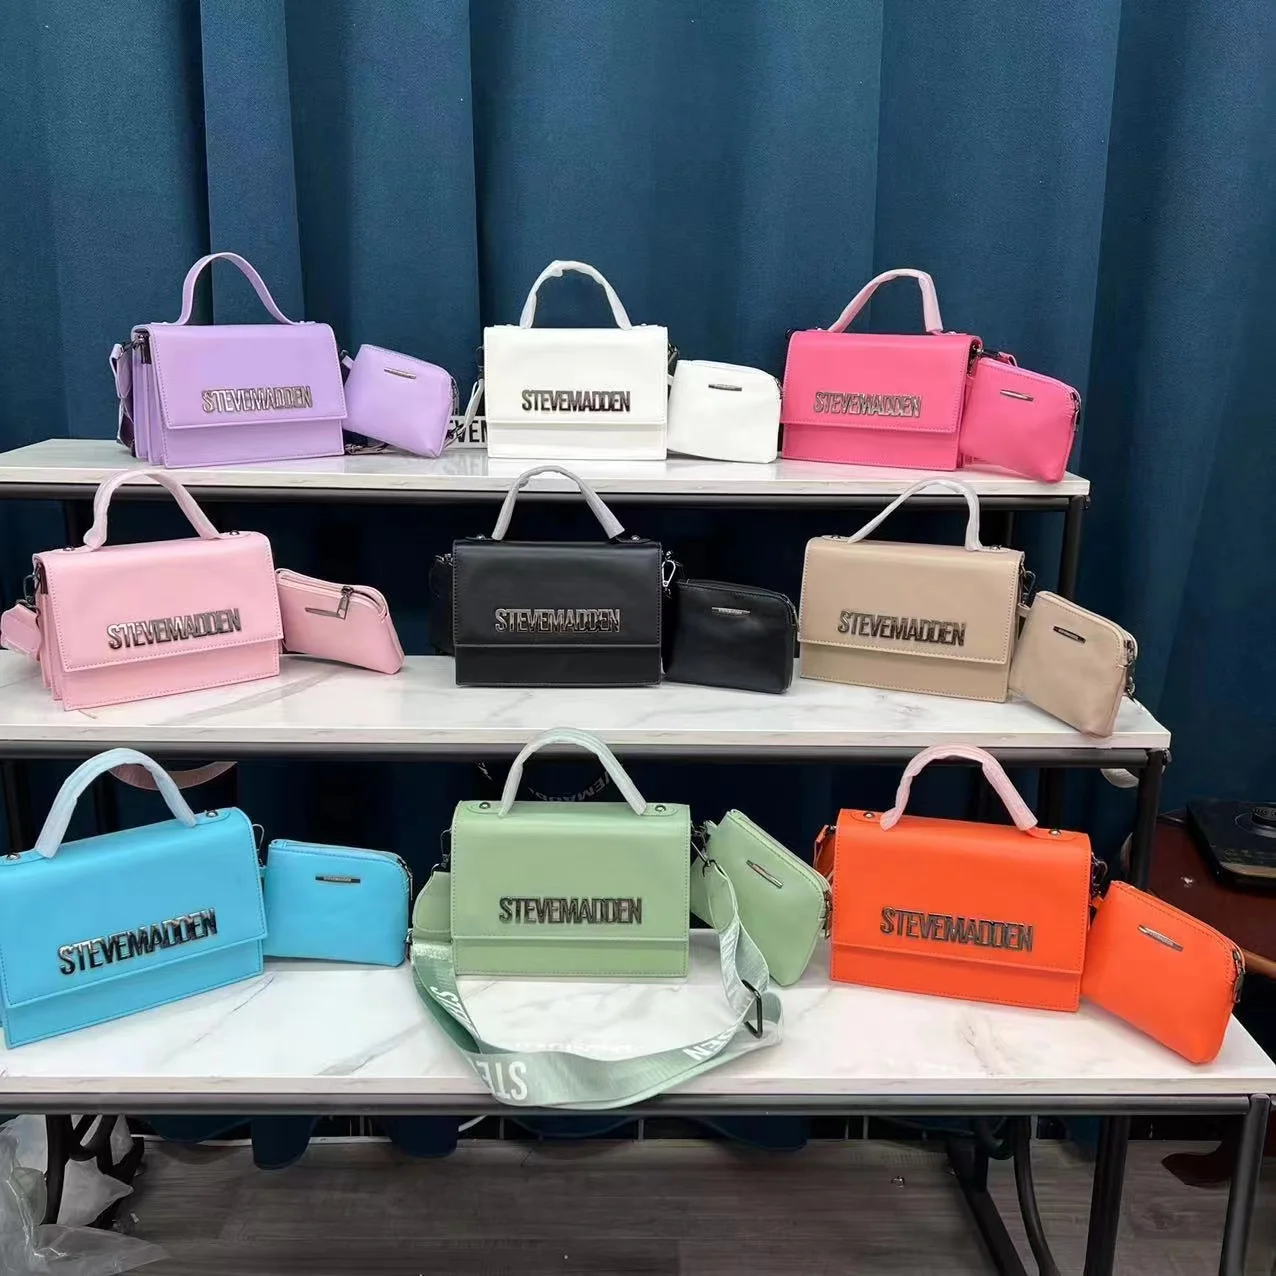 

2022 Hot Sale Ladies Pu Leather Steve Madden Handbags Purse Shoulder Bags And Handbags For Women Luxury